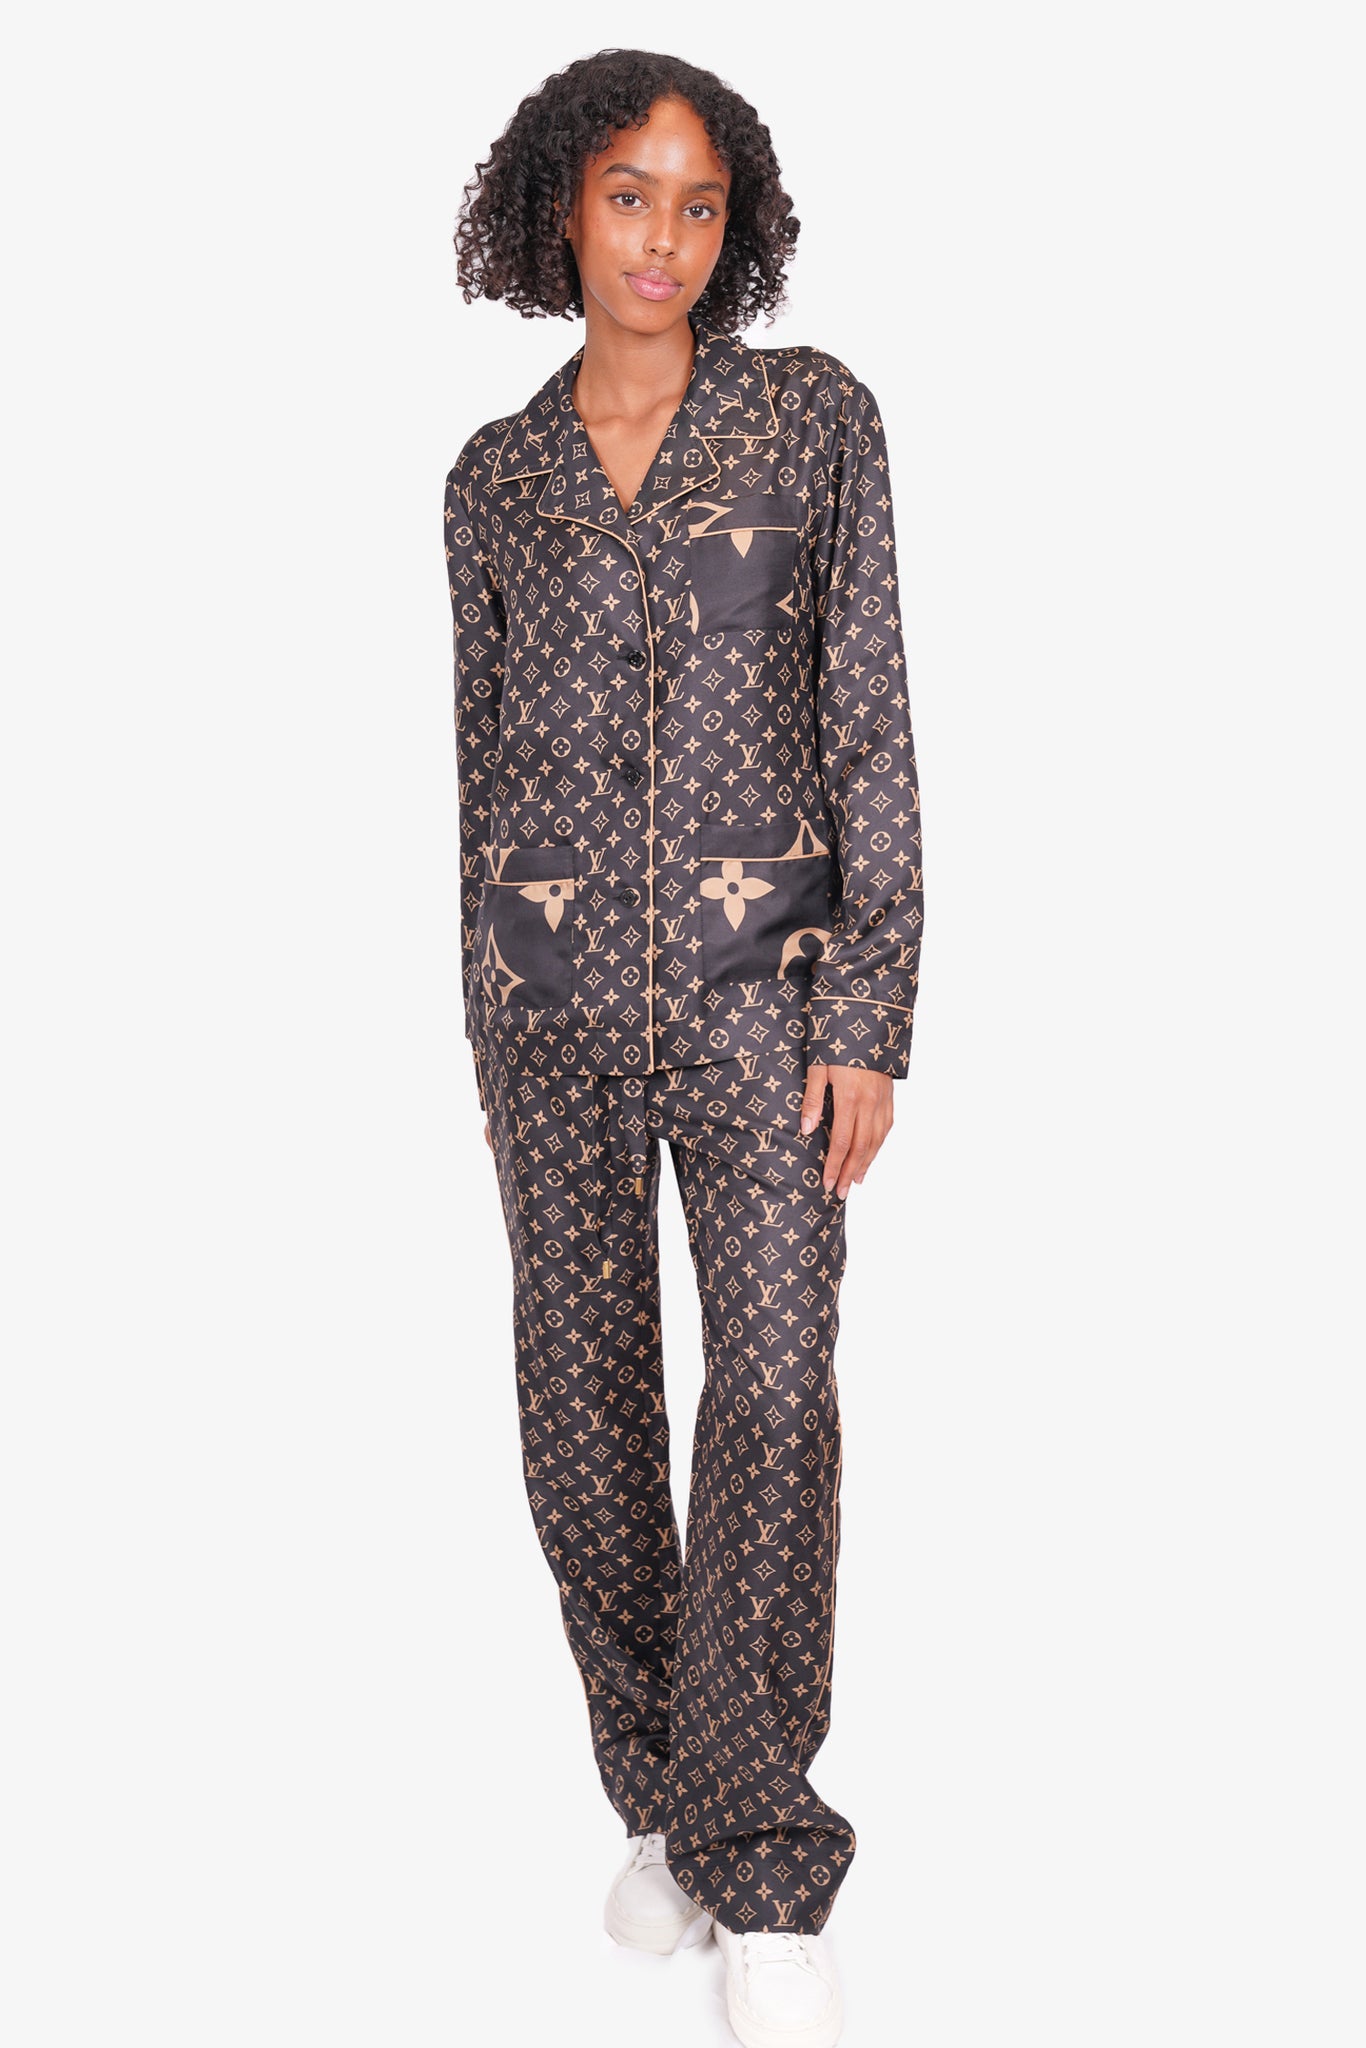 Louis Vuitton Leopard Silk Front Cardigan